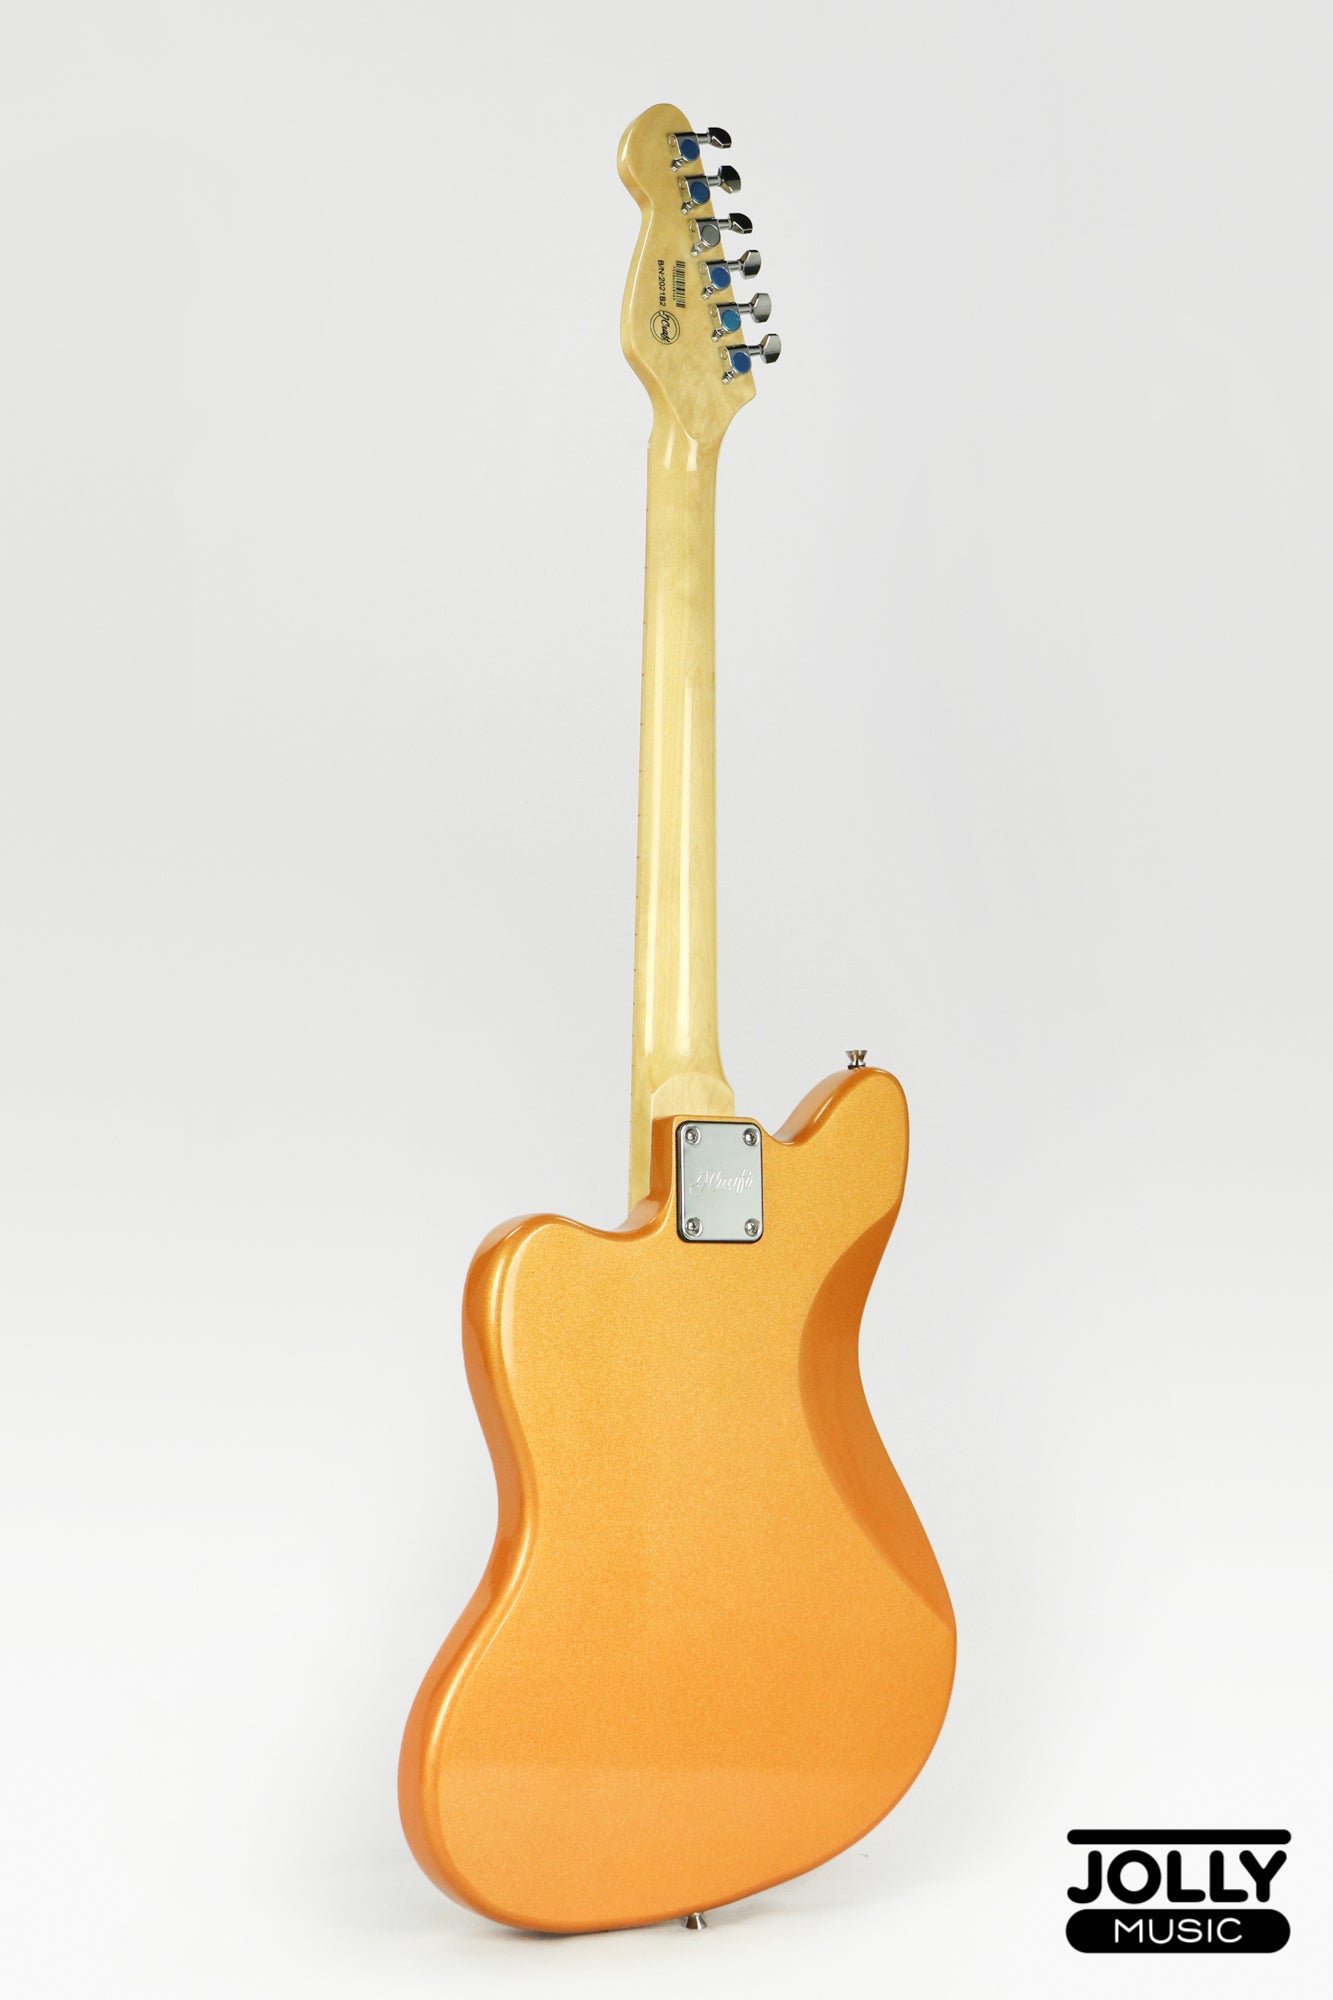 JCraft JZ-1 Offset Electric Guitar - Metallic Orange